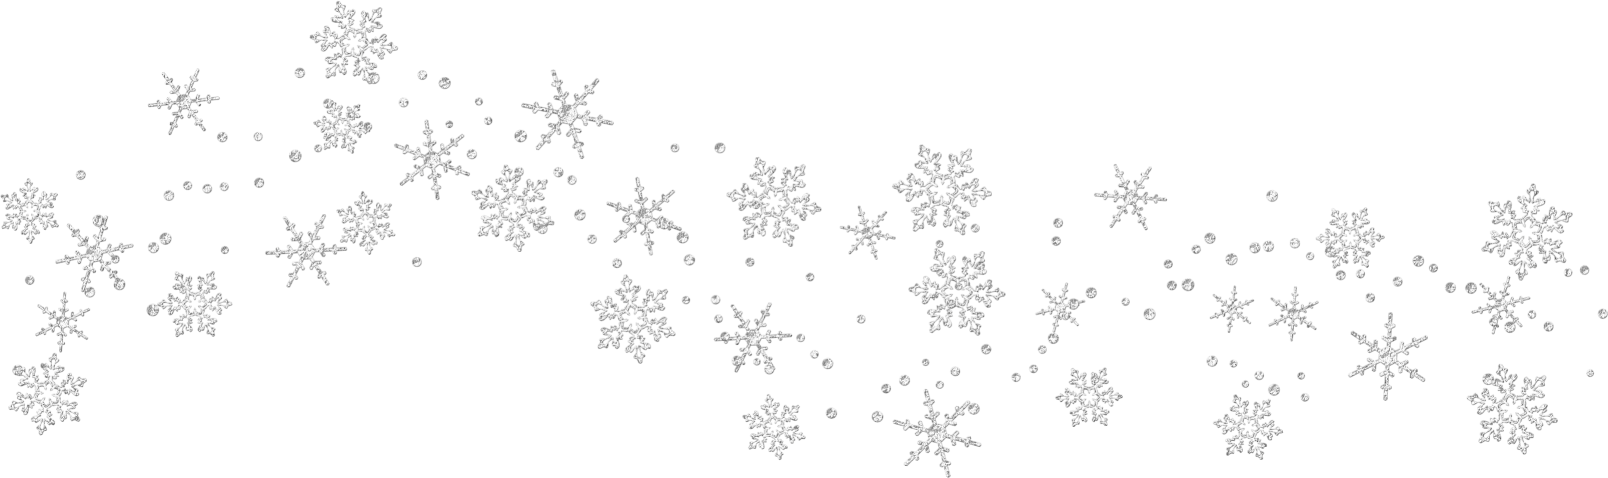 Transparent Snowflakes Png Image Clipart